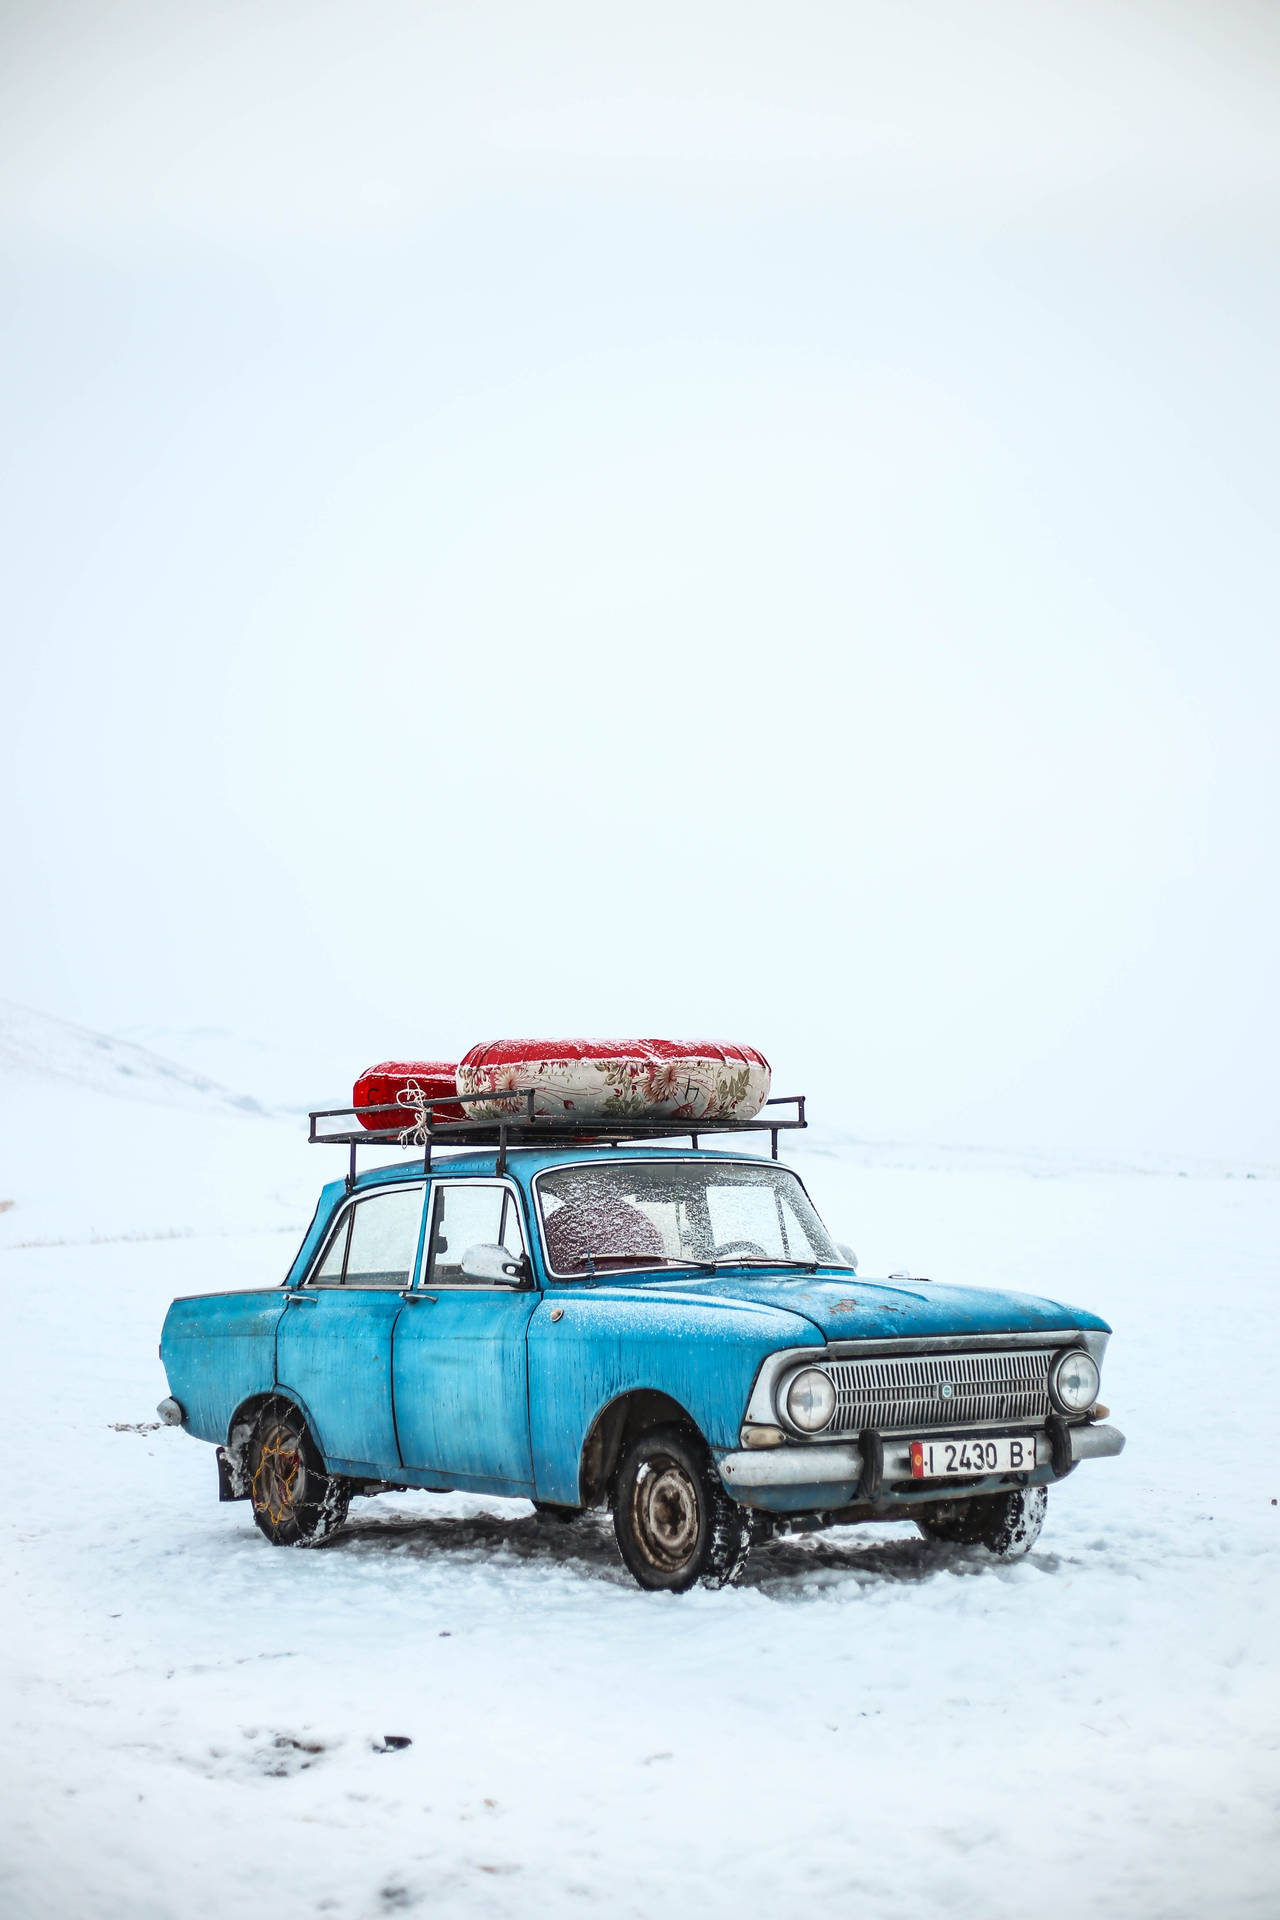 Kyrgyzstan Winter Blue Car Wallpaper